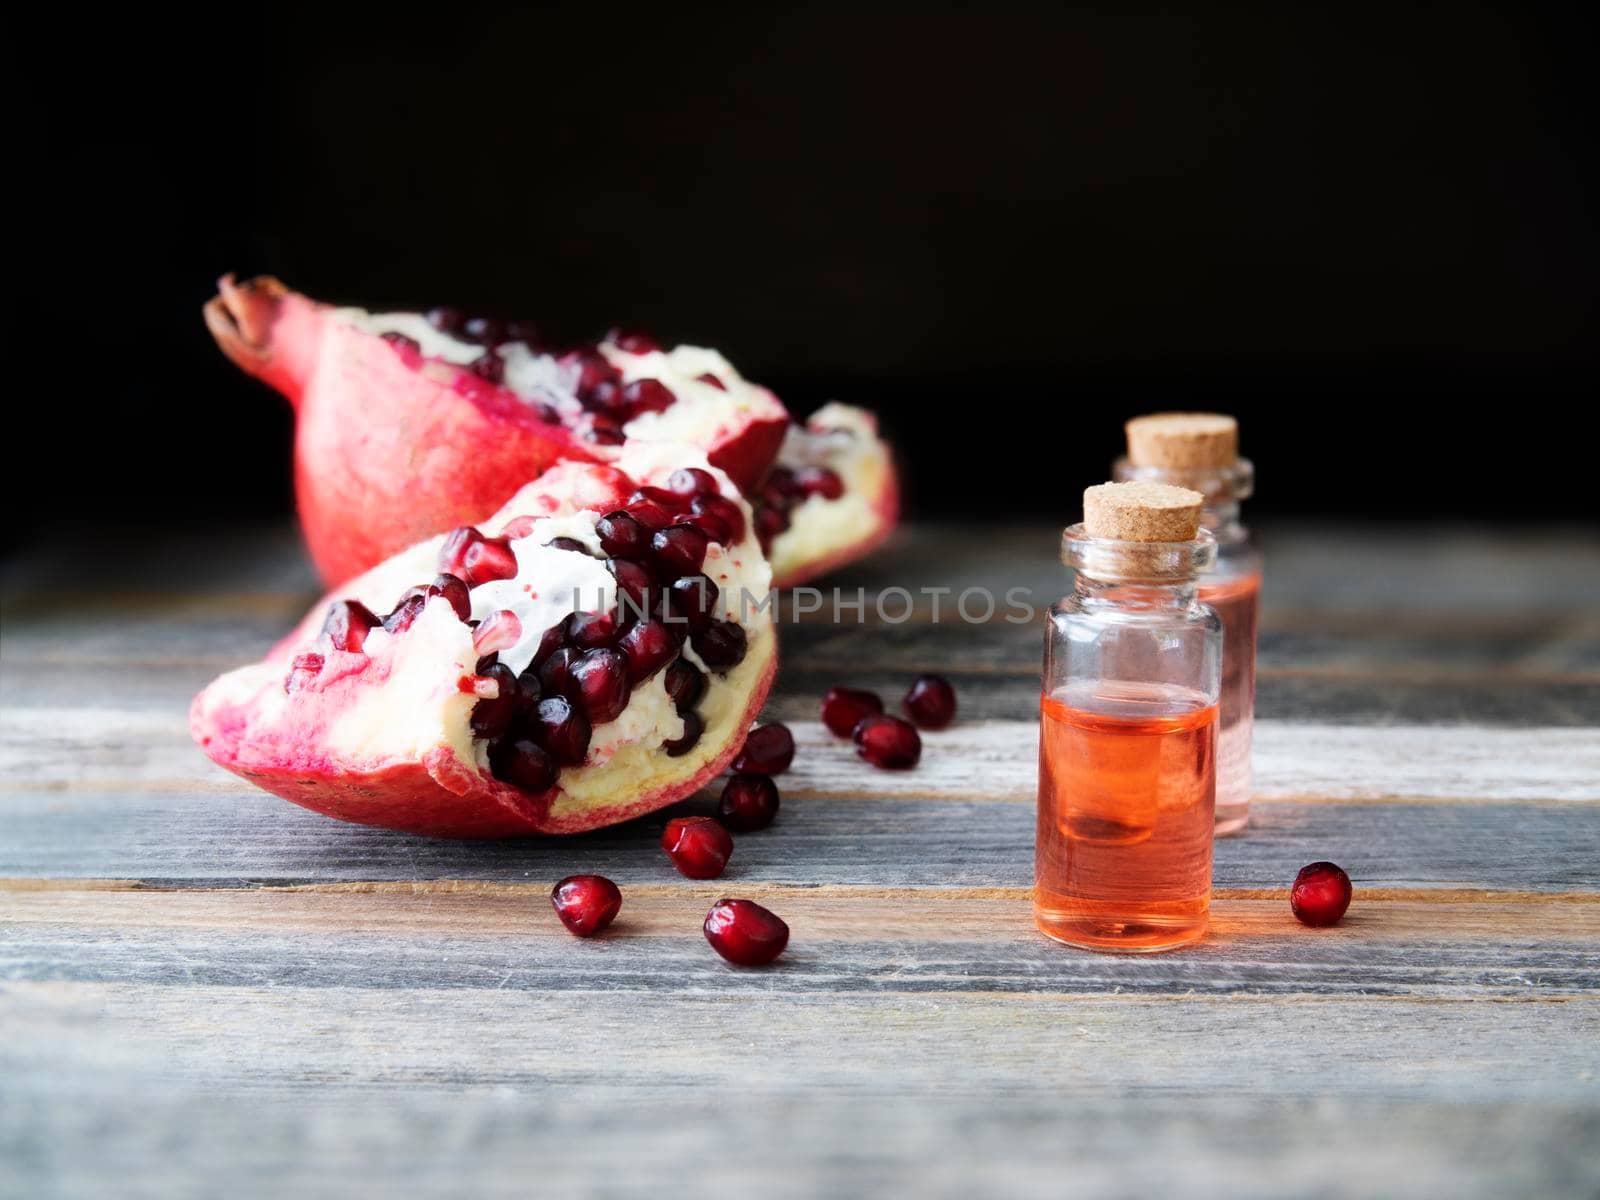 Pomegranate Extract by charlotteLake